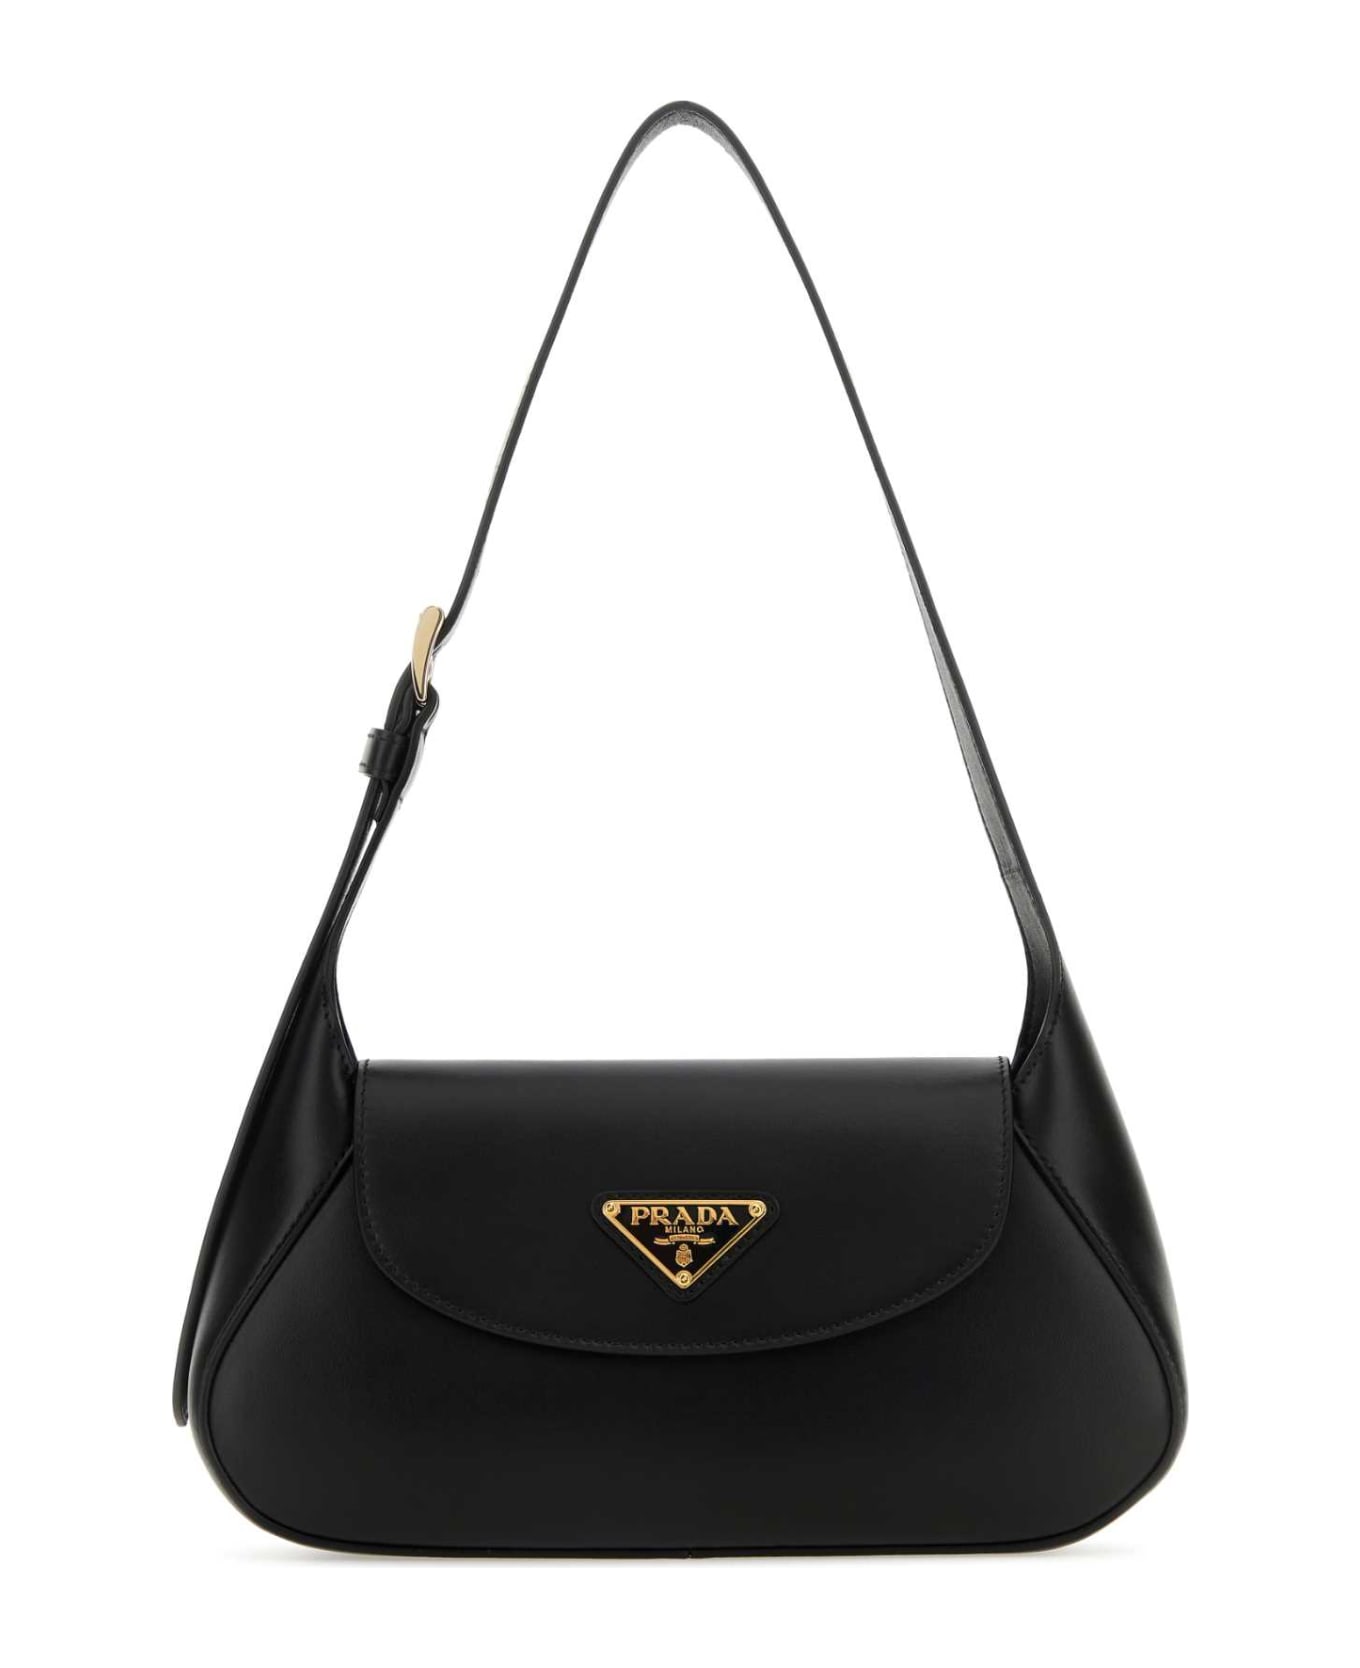 Prada Black Leather Shoulder Bag - NERO